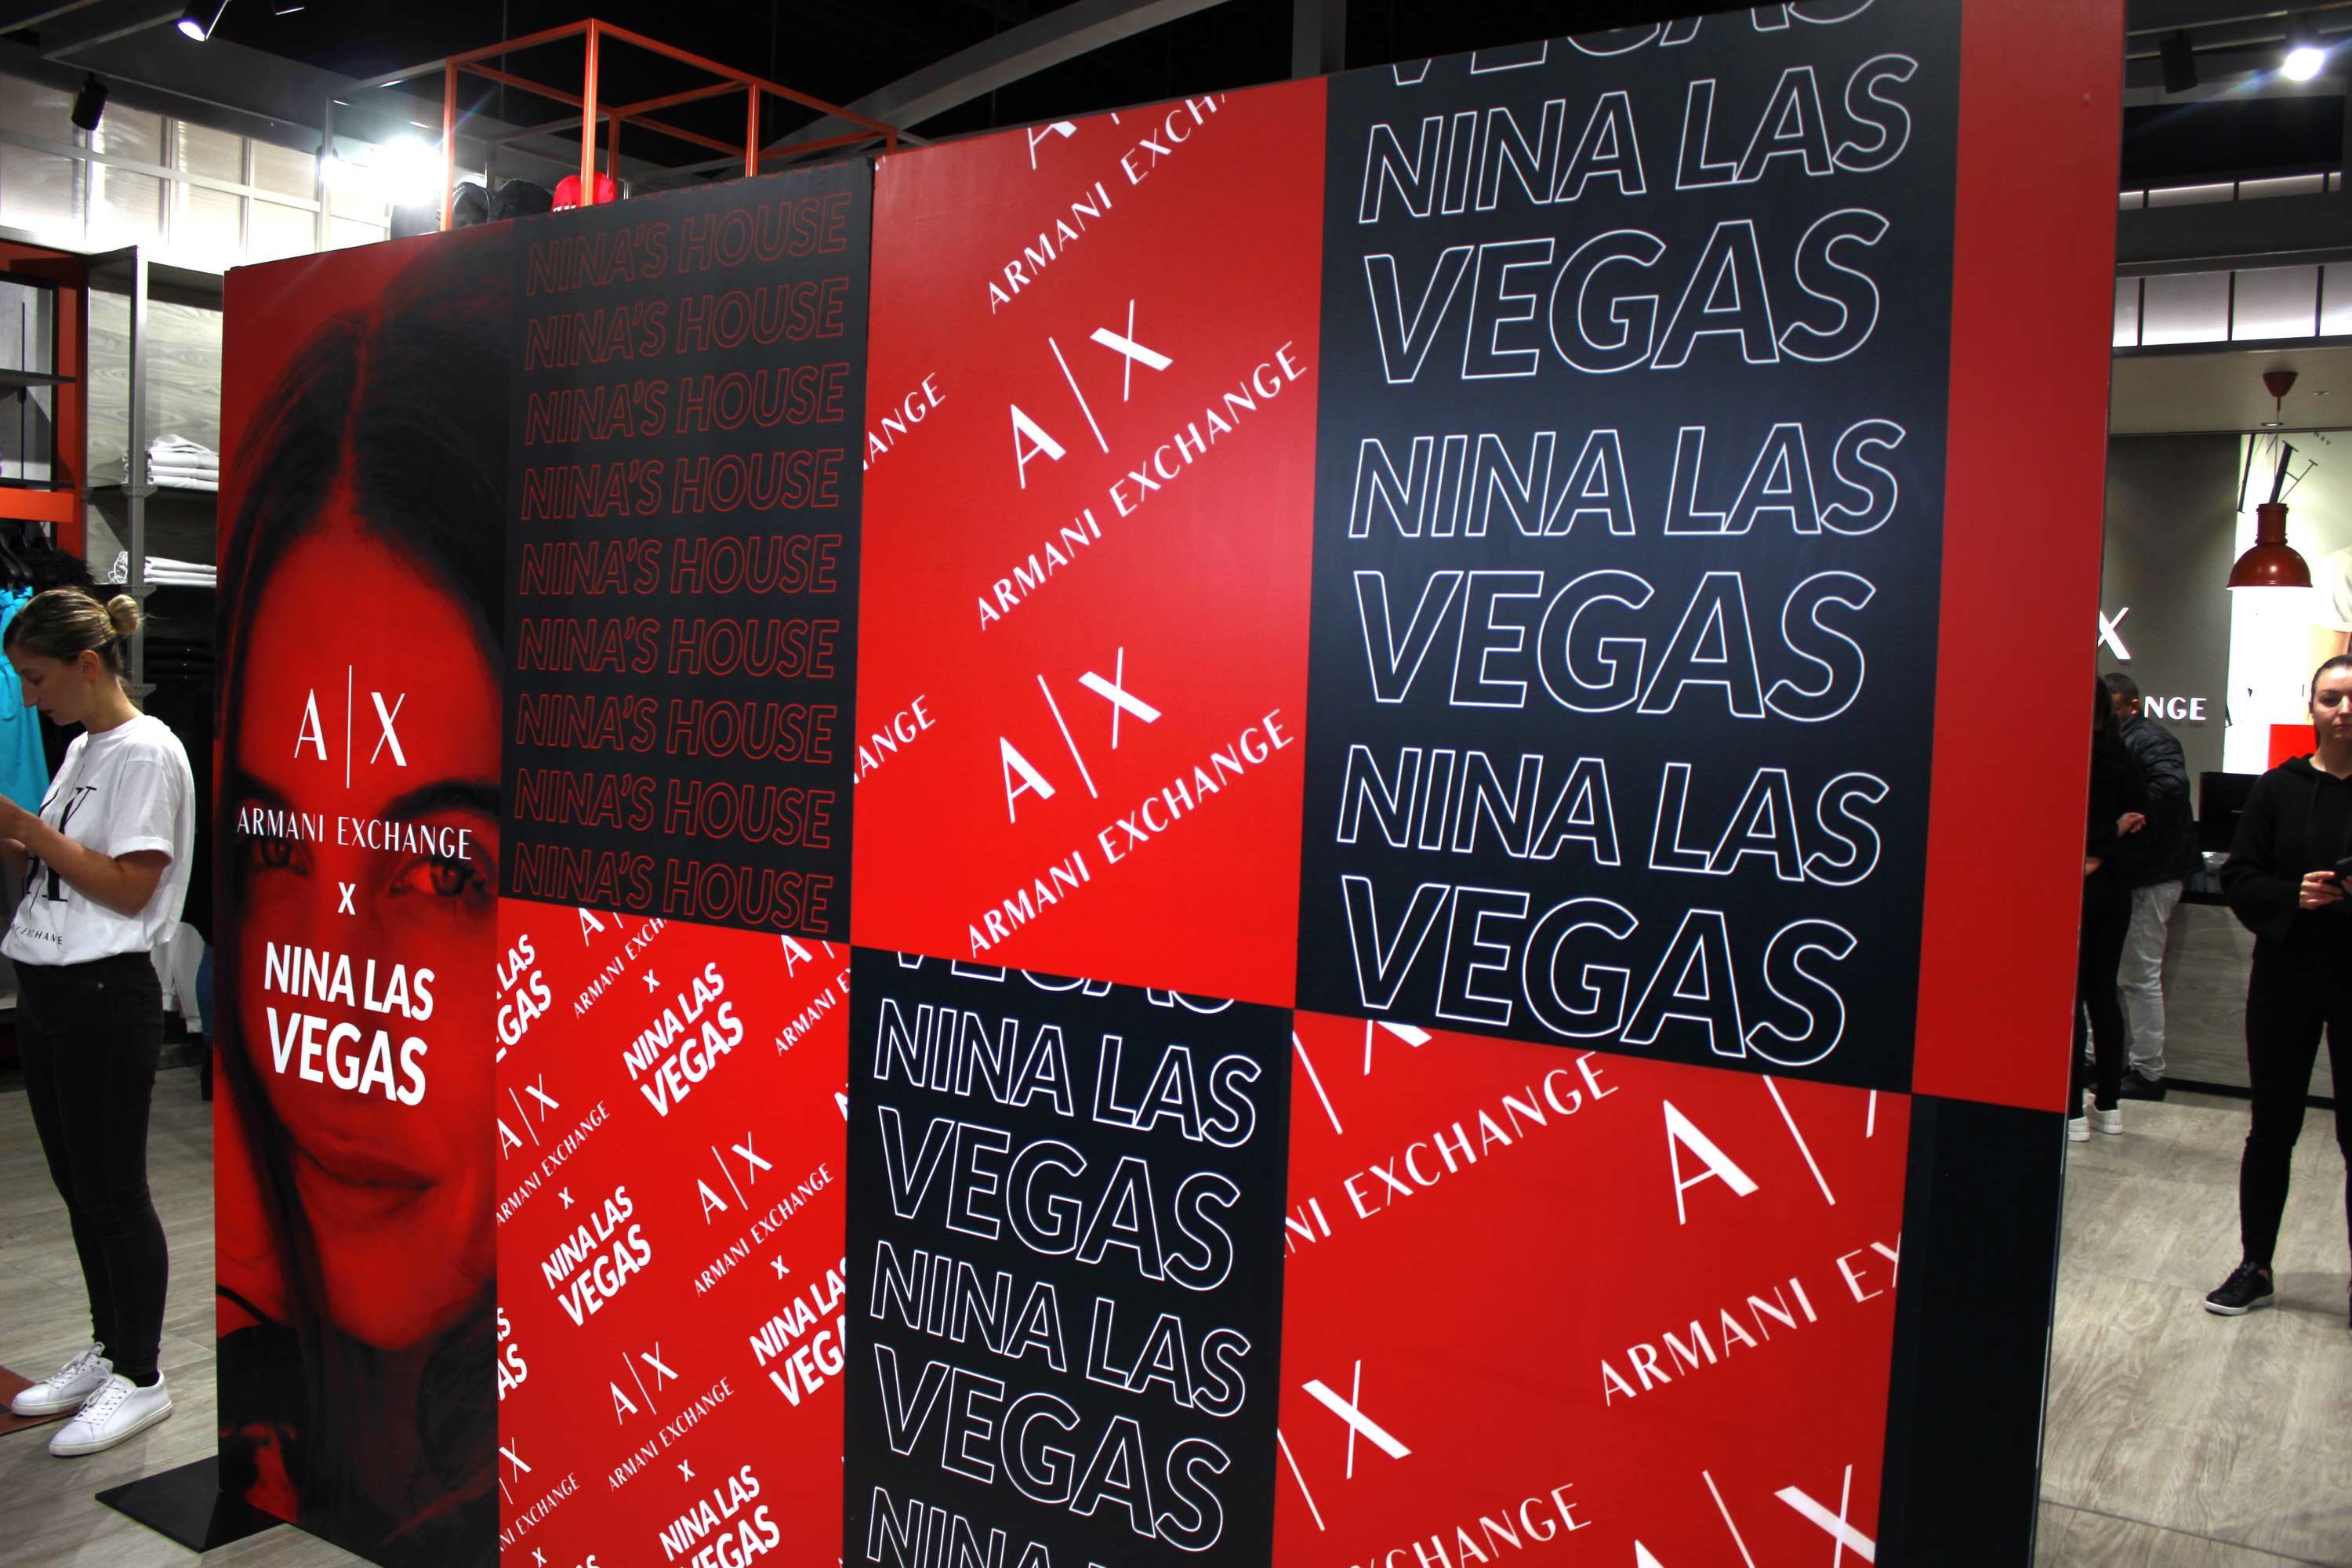 Armani Exchange X Nina Las Vegas | The Dots